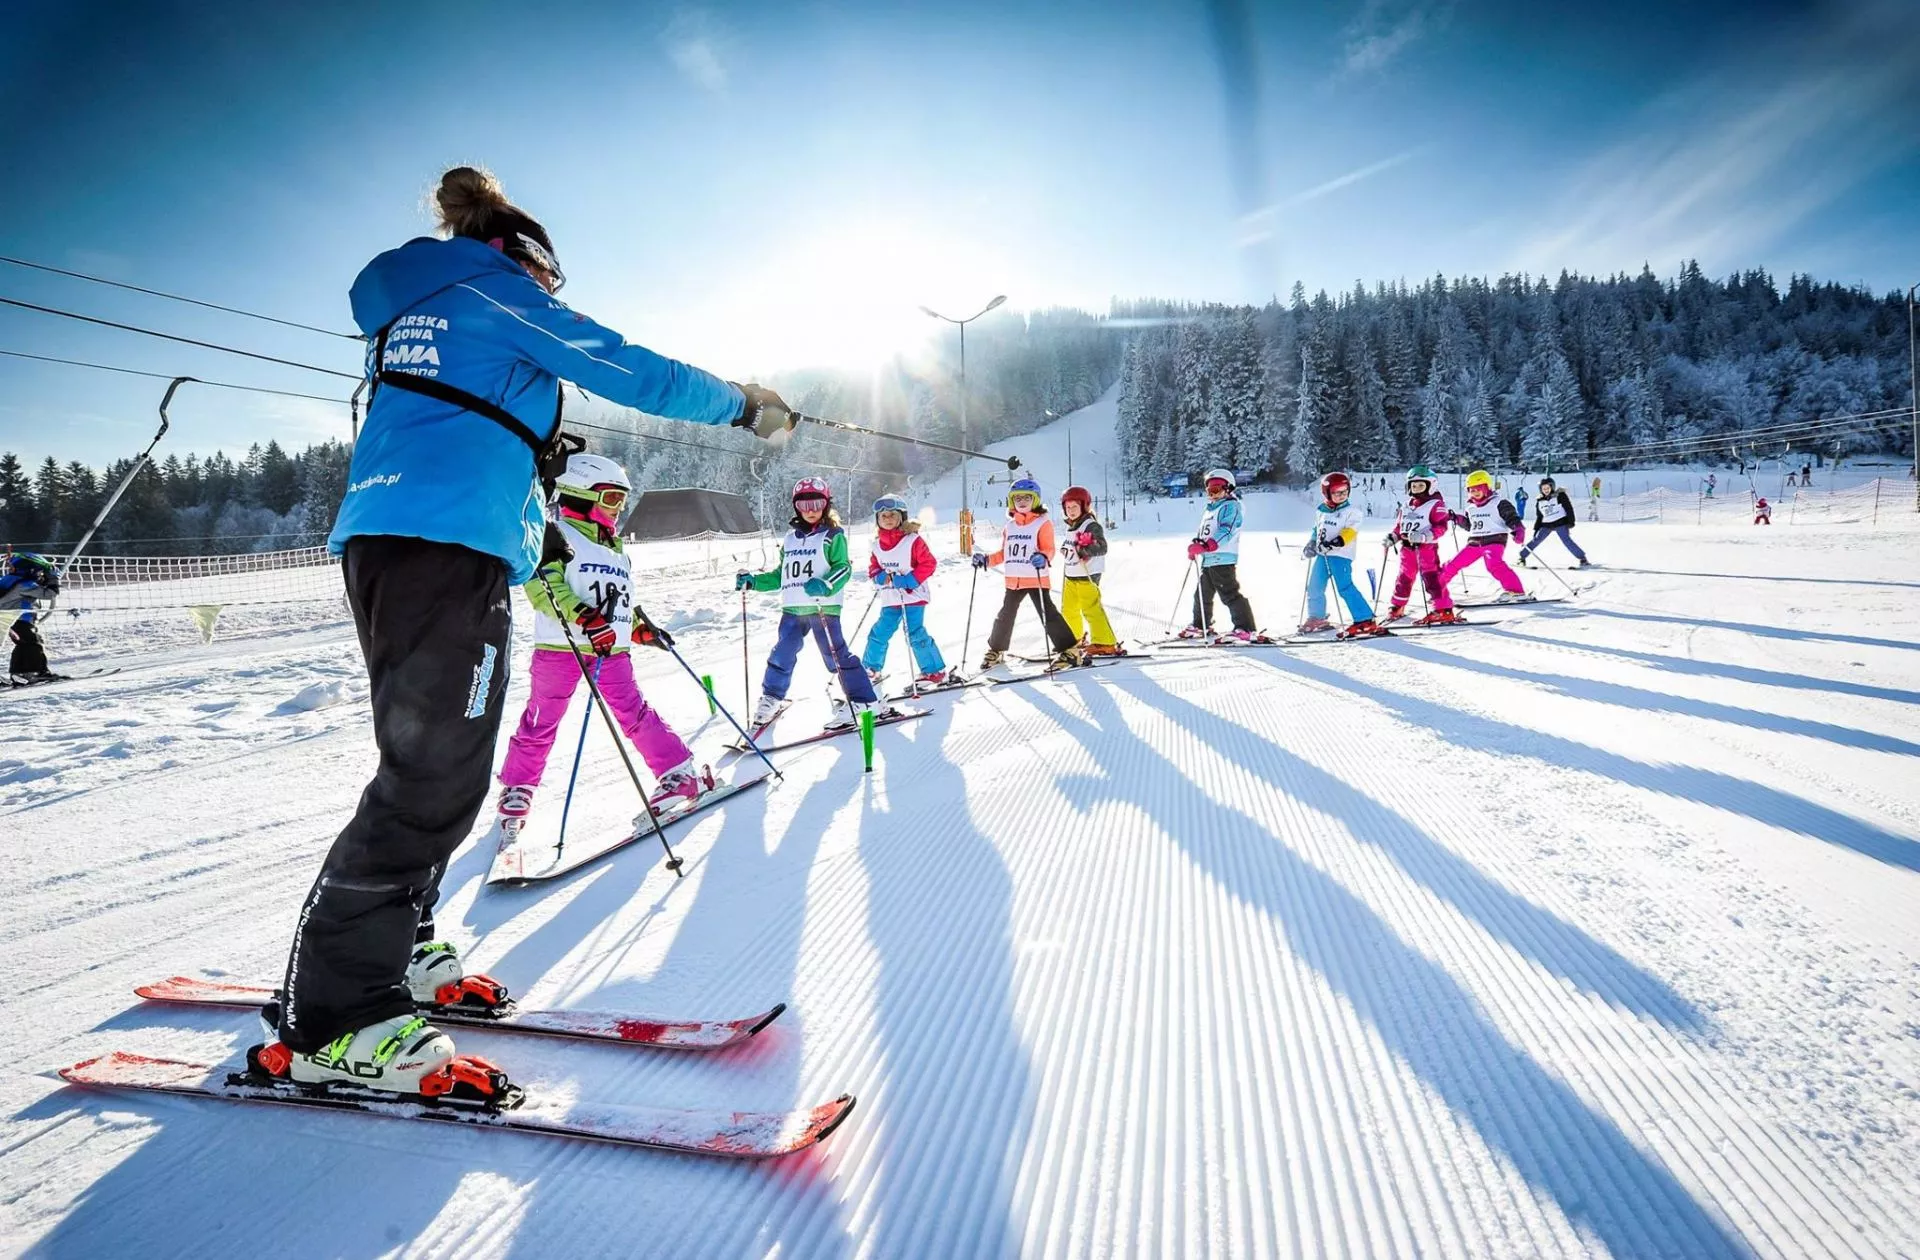 Nosal Ski Center in Poland, Europe | Snowboarding,Skiing - Rated 4